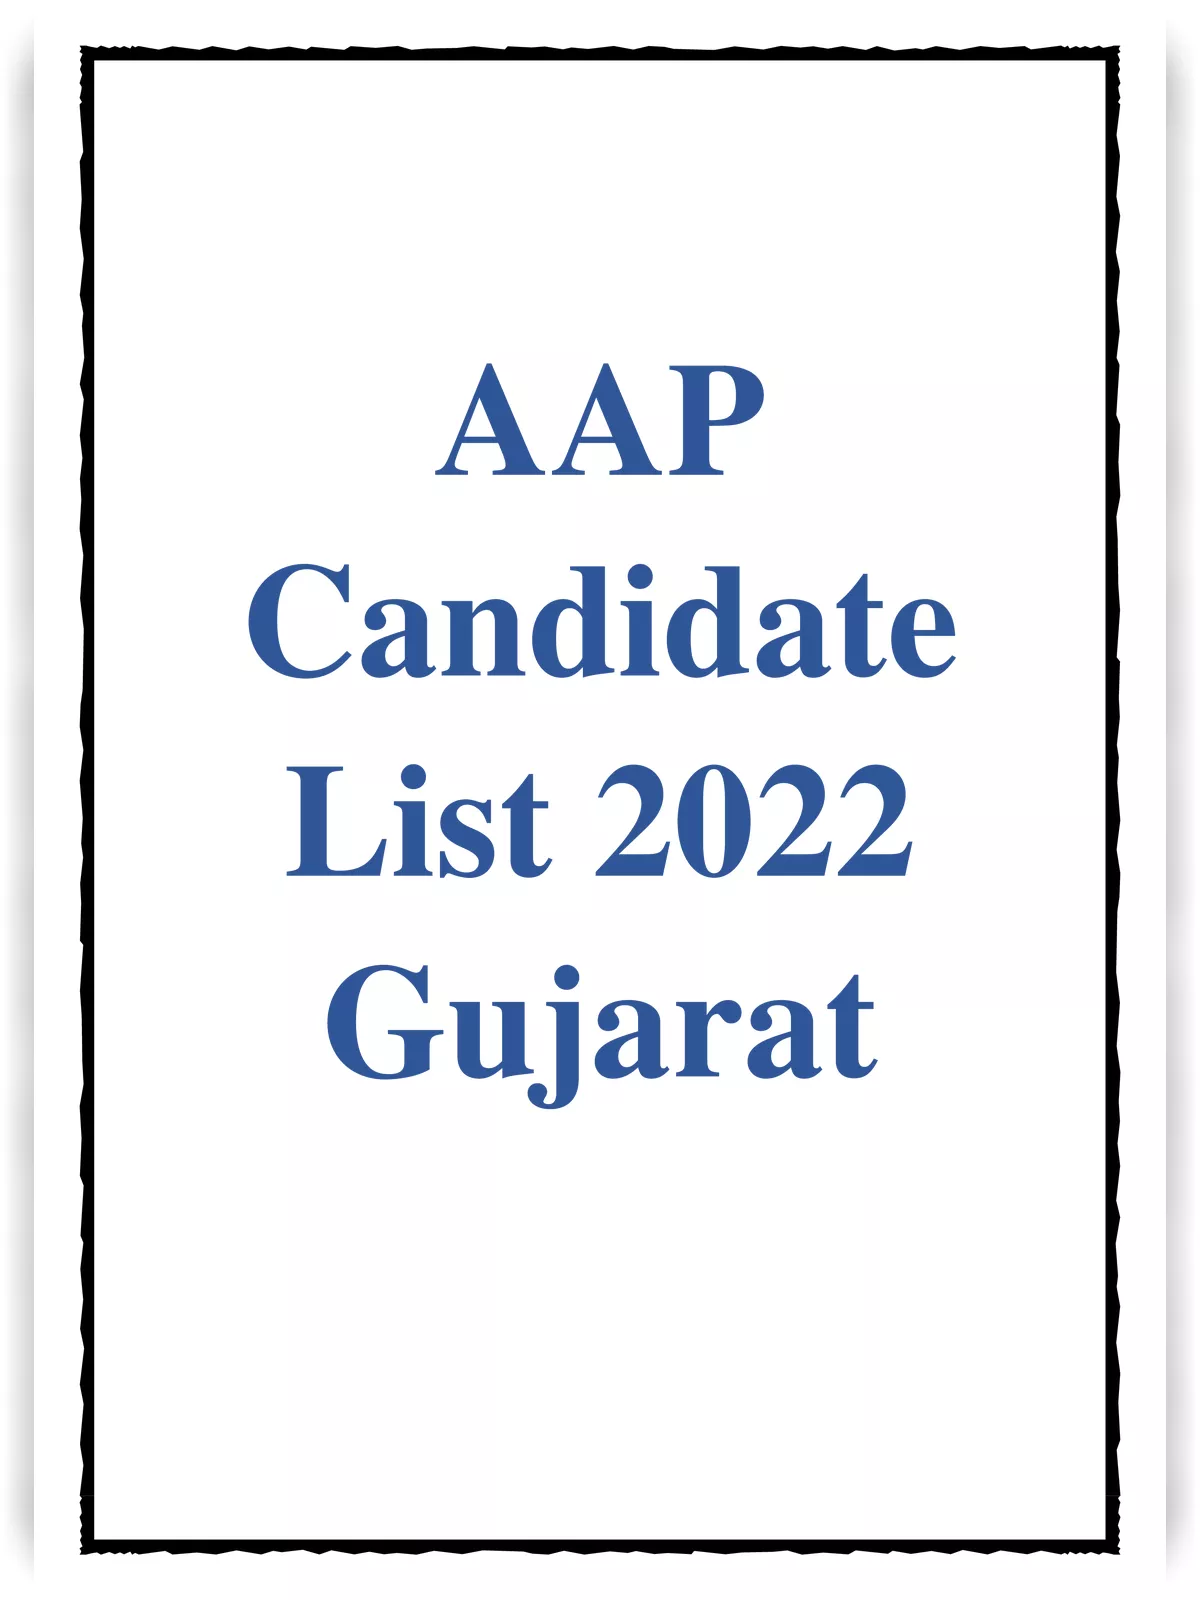 AAP Candidate List 2022 Gujarat